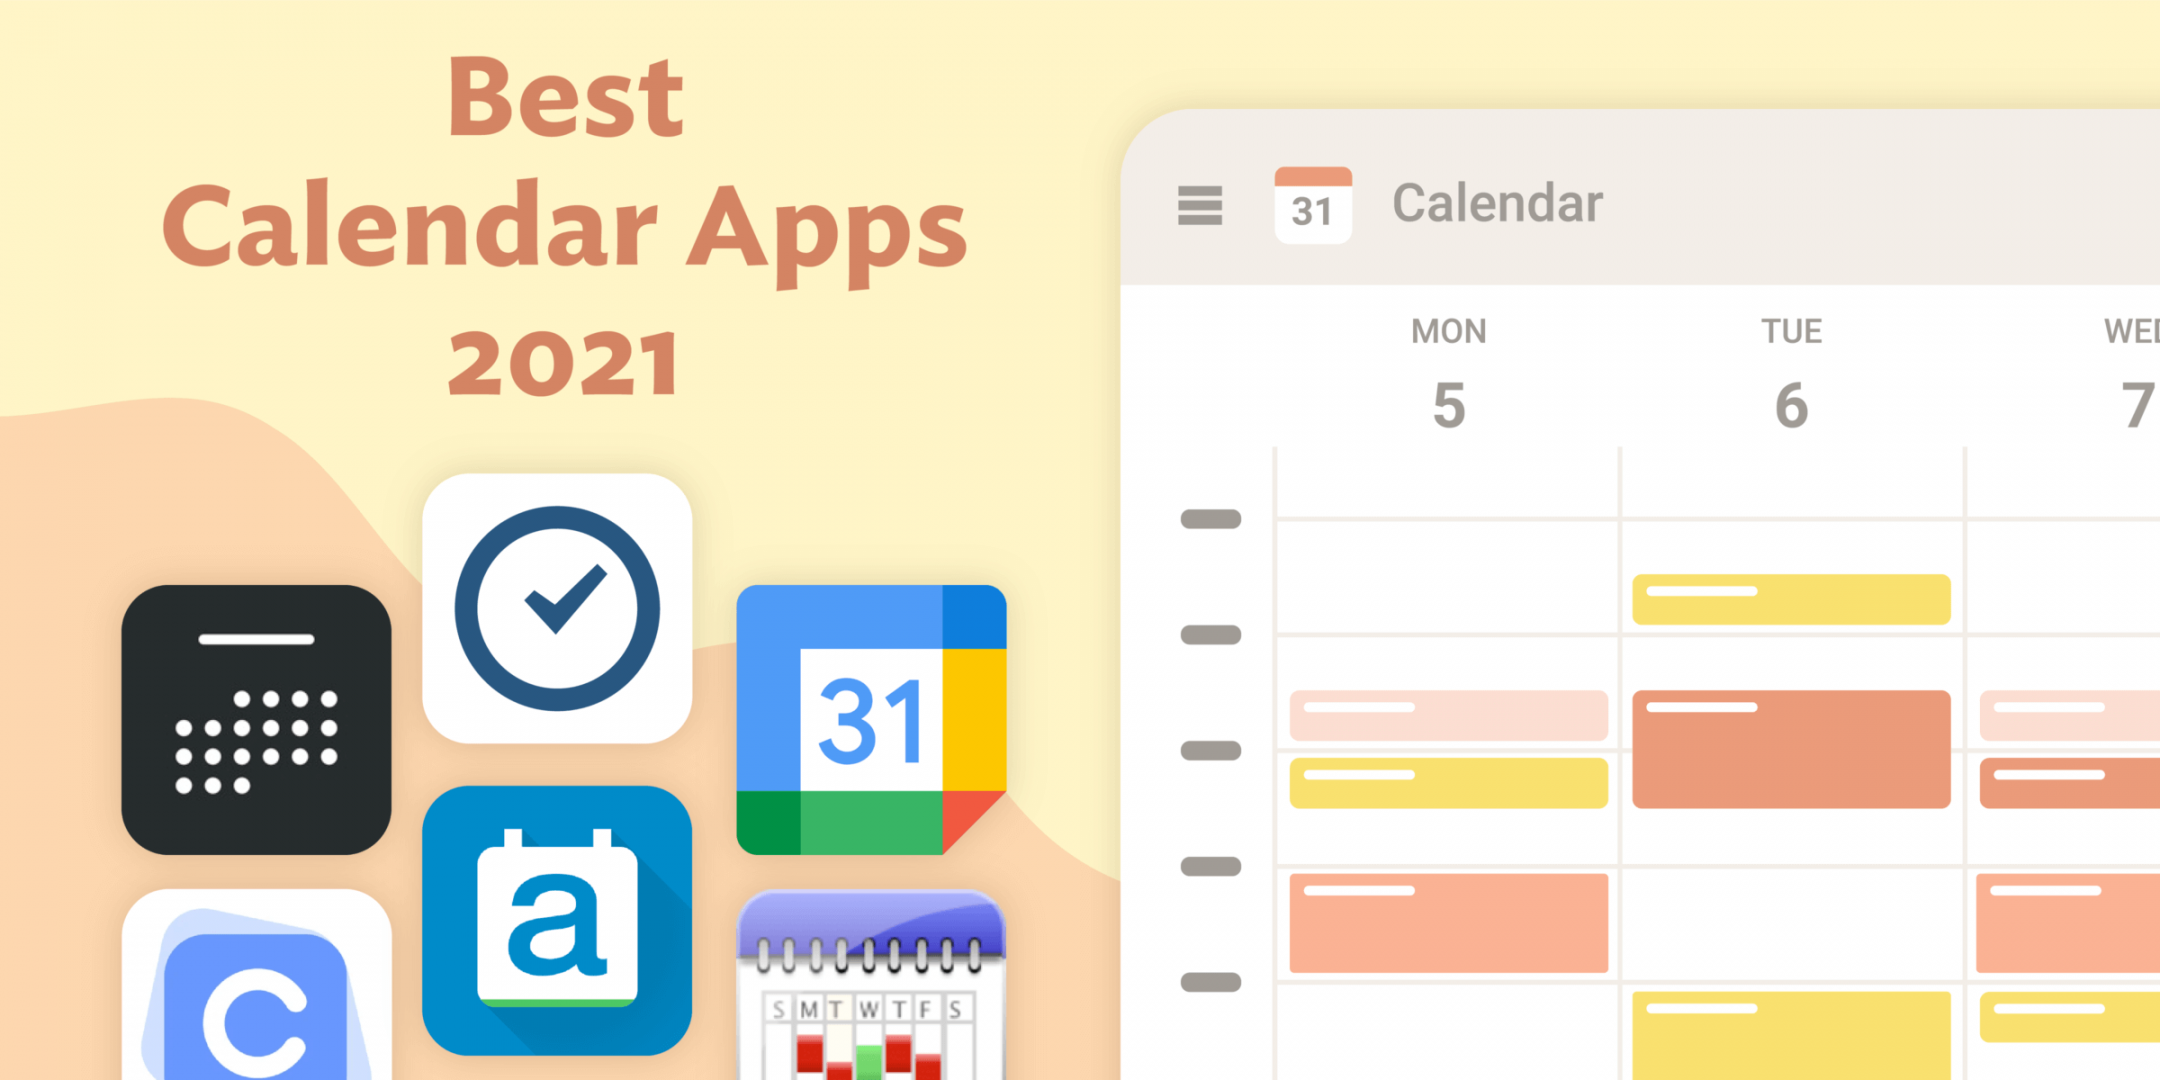 Best Calendar Apps in Clockwise